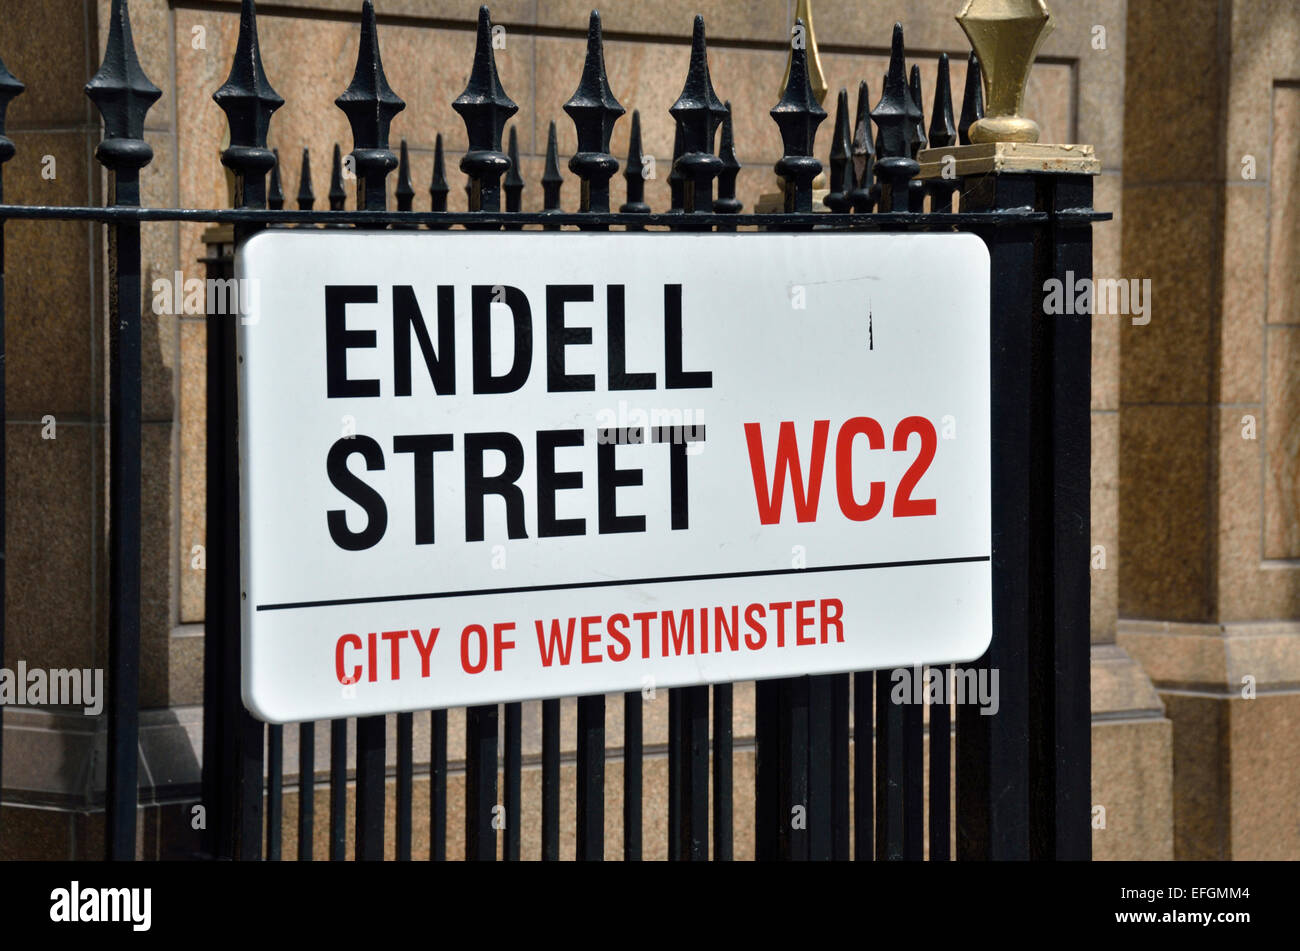 Endell Street WC2 street sign Covent Garden, London, UK. Stock Photo